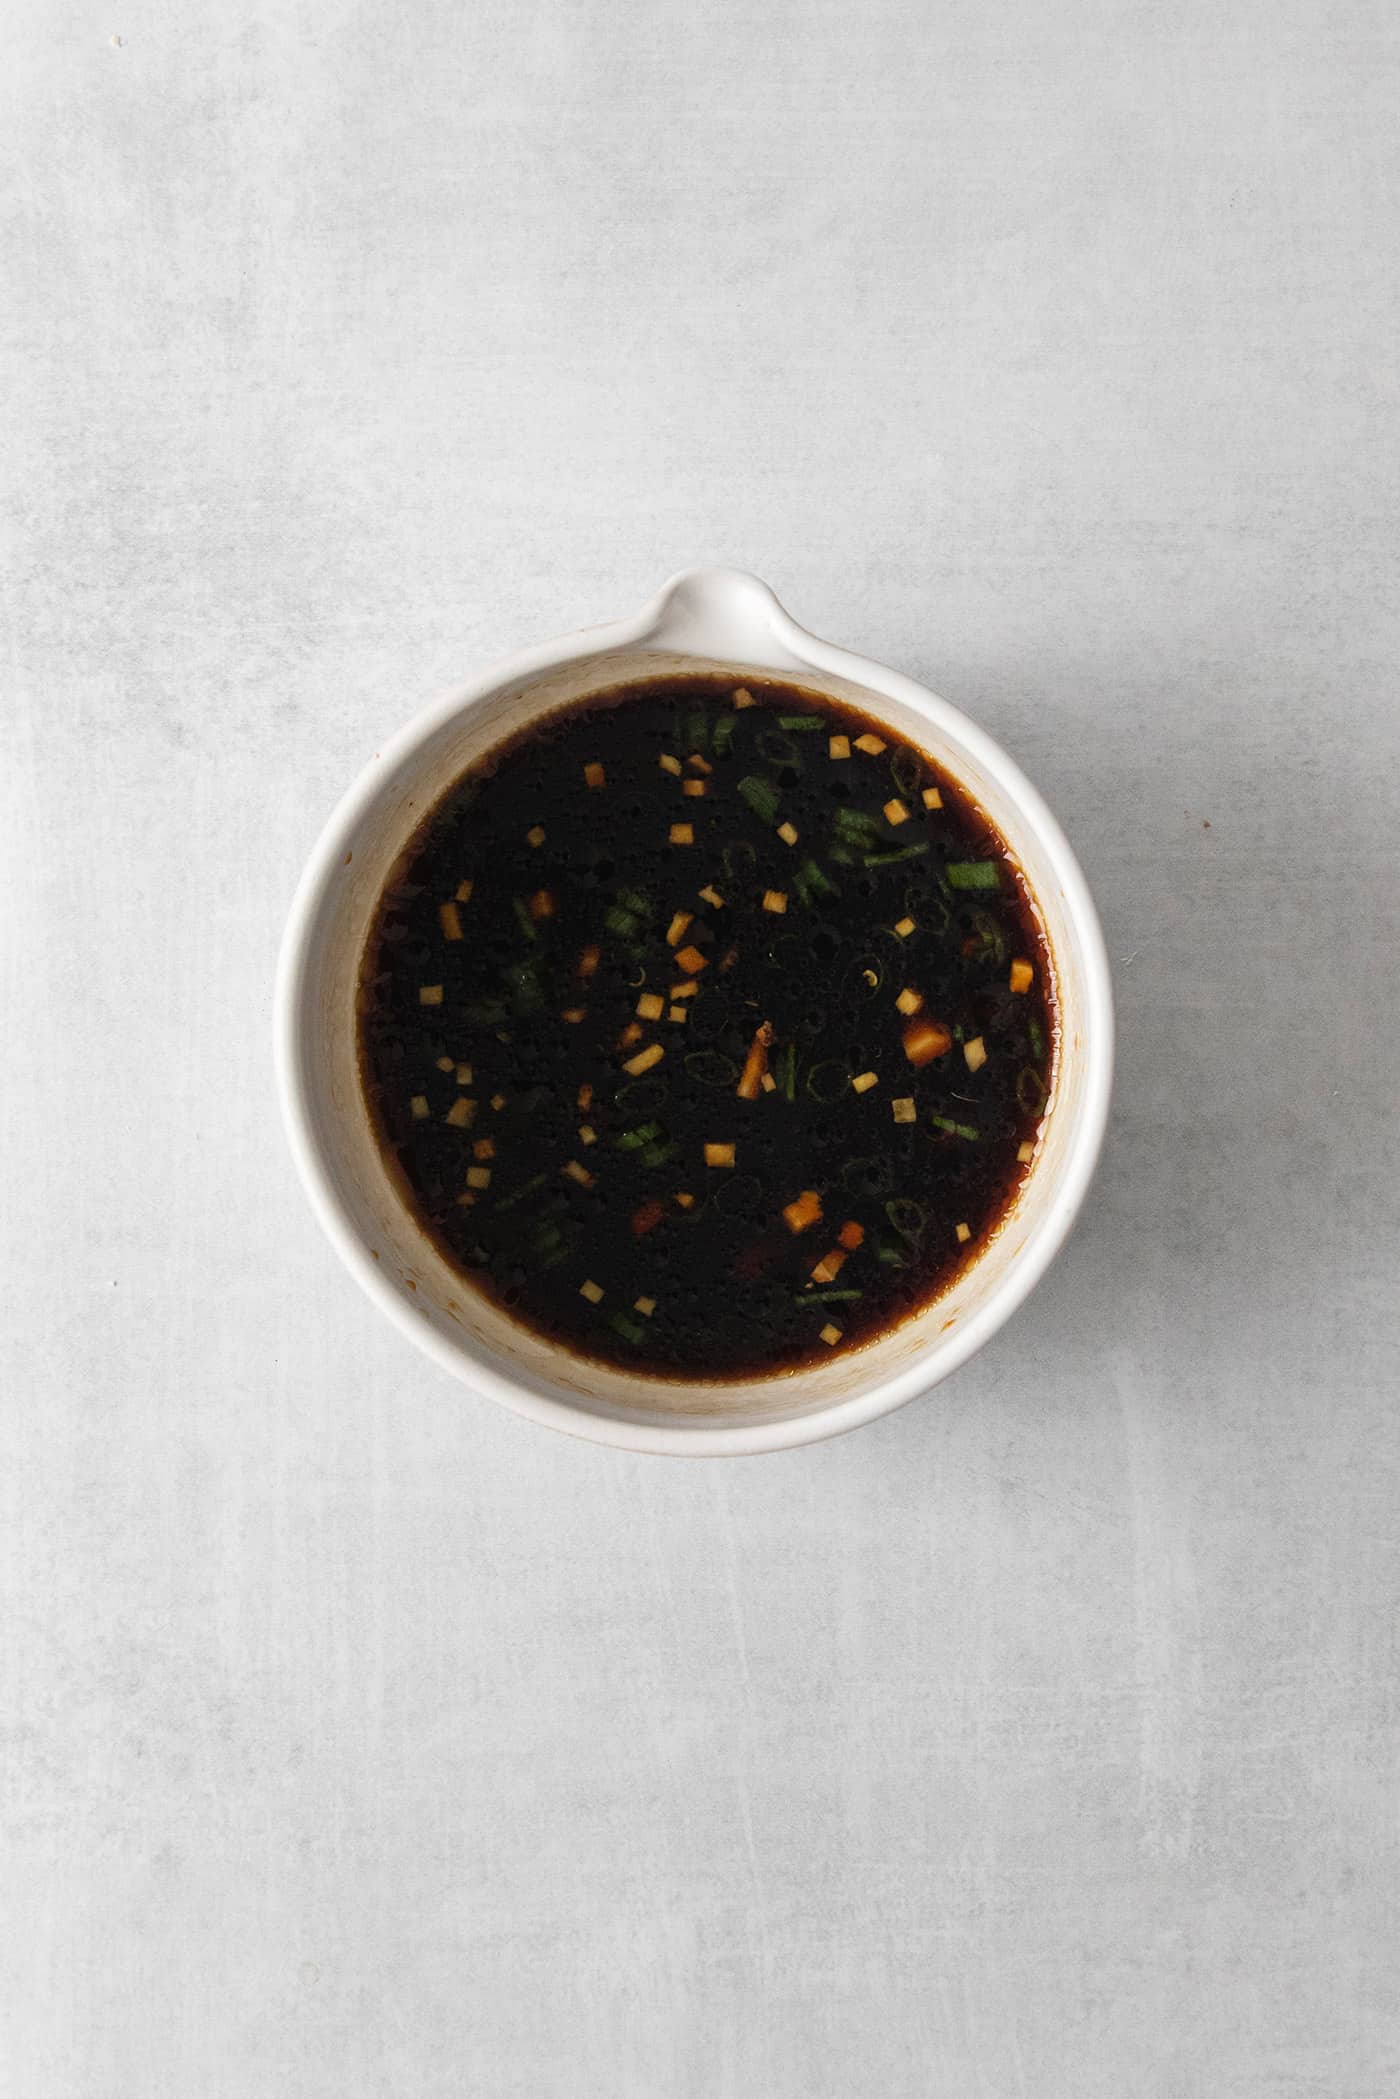 A bowl of potsticker dpping sauce